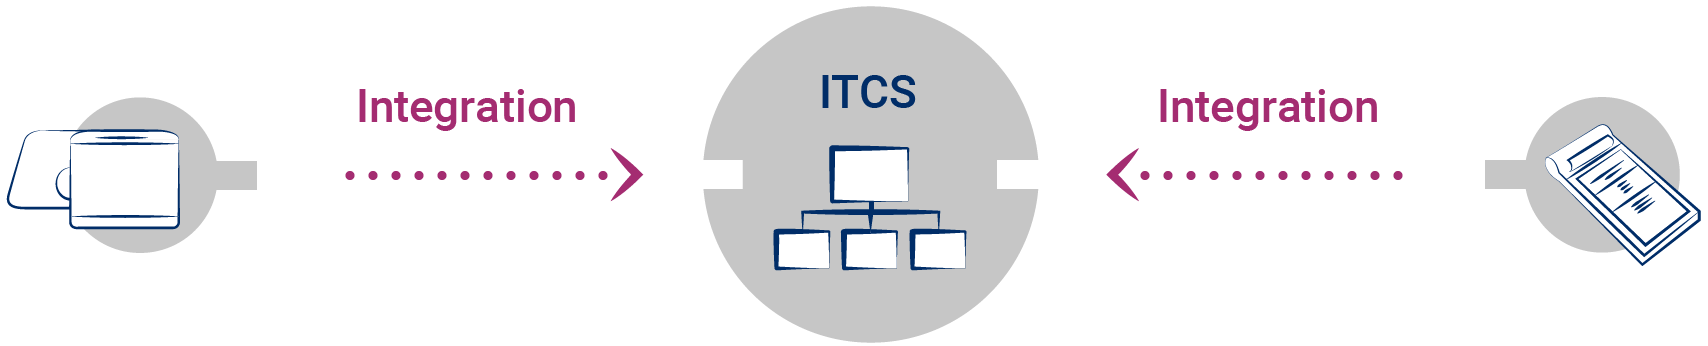 ITCS integration